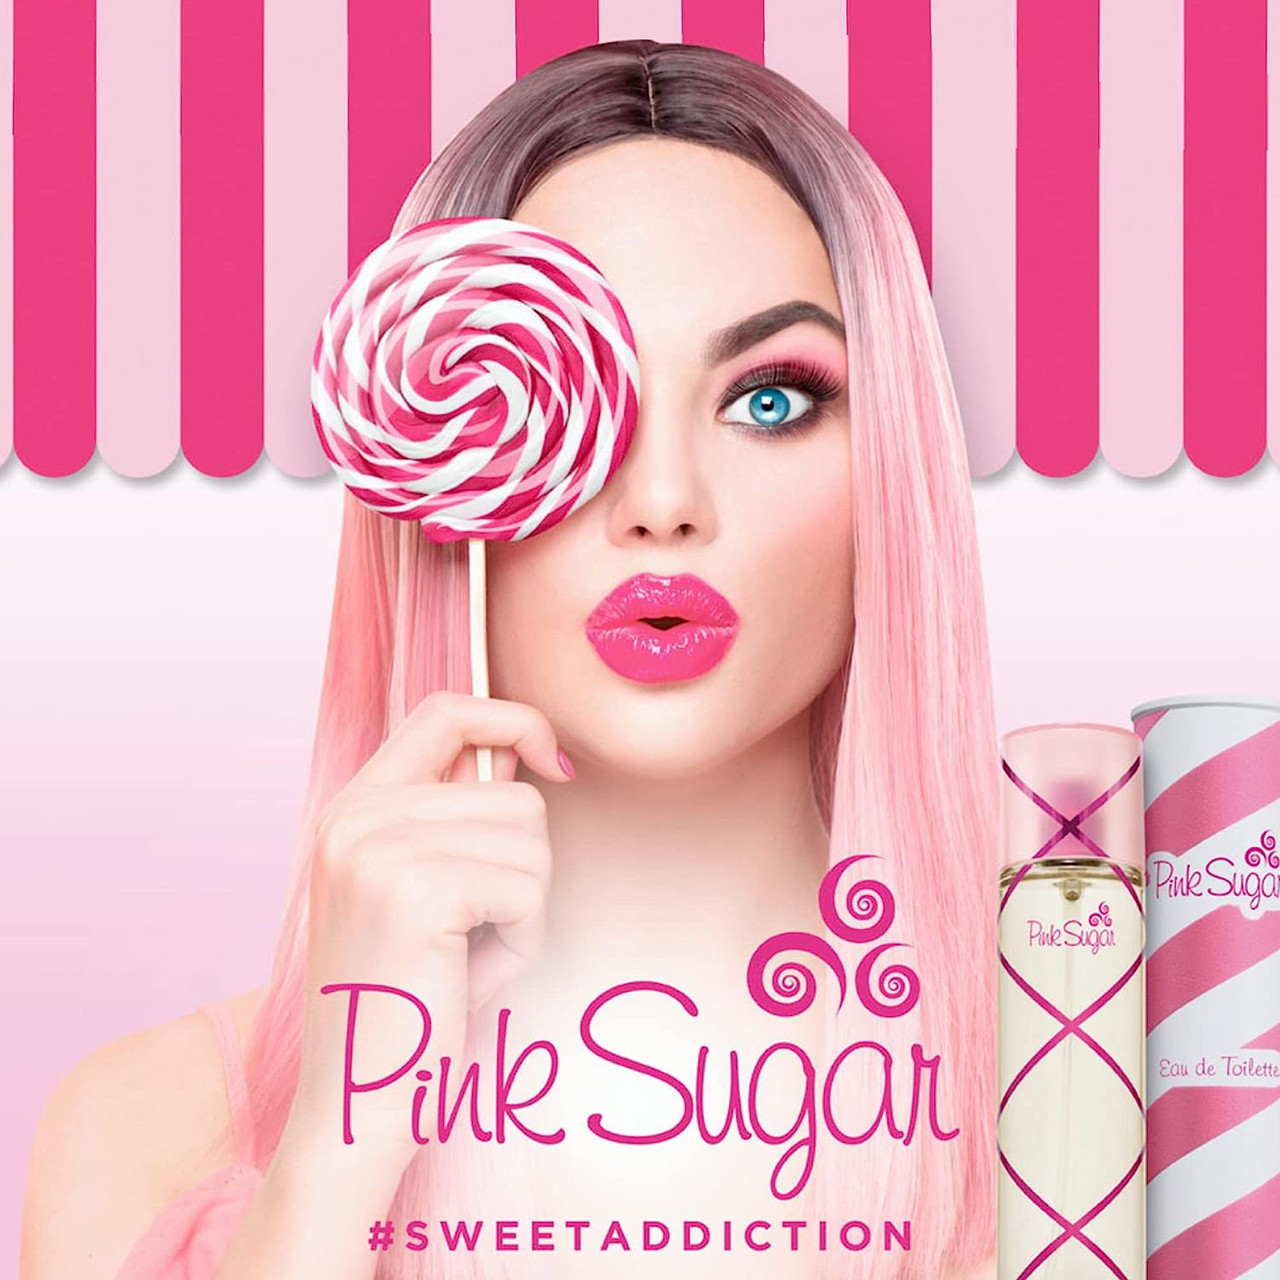 Pink Sugar Berry Blast Eau de Toilette Perfume for Women, 3.4 Fl. Oz.